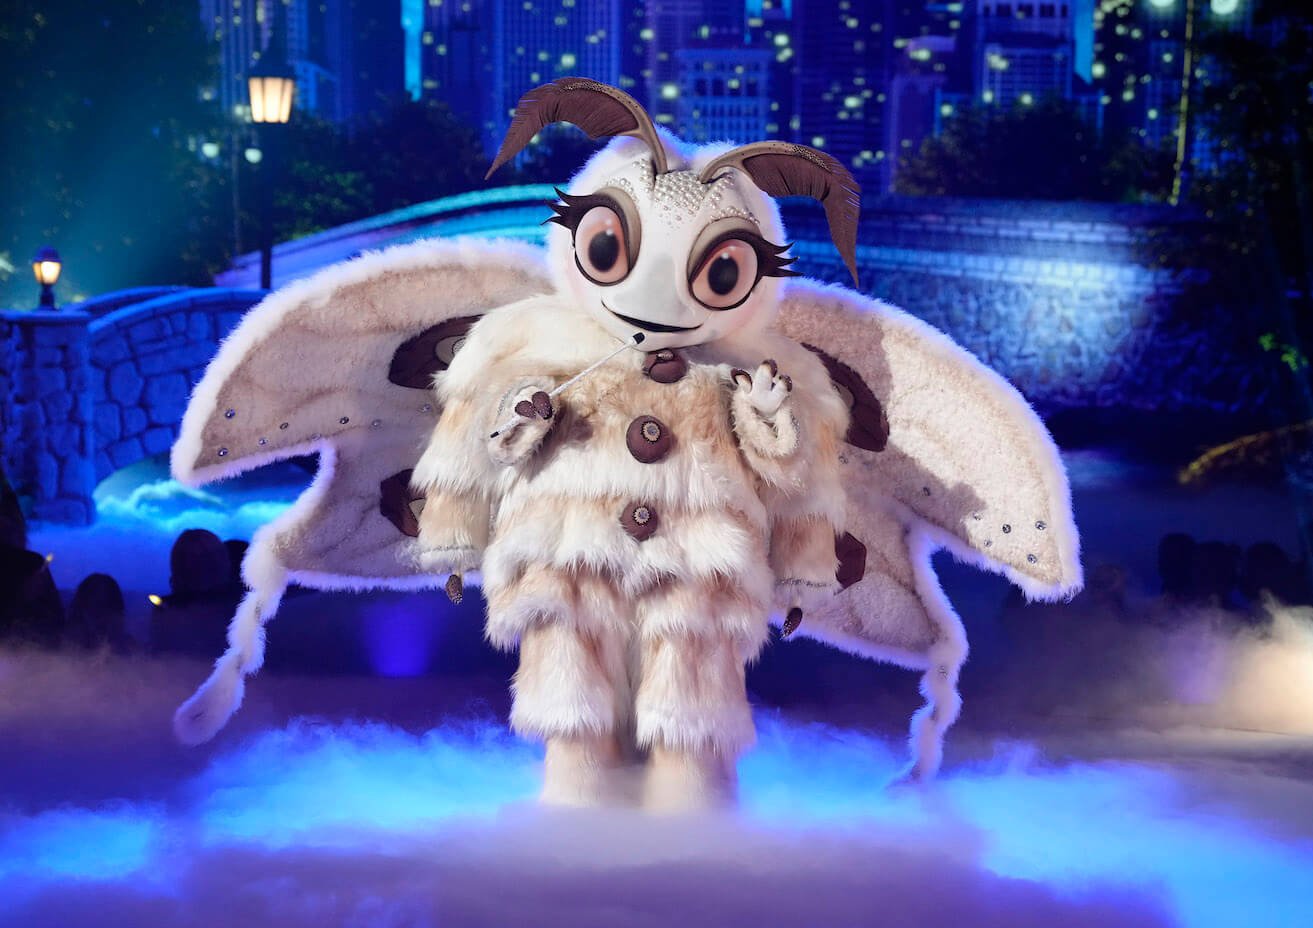 'The Masked Singer' Season 11 Group C singer Poodle Moth on stage illuminated by blue light